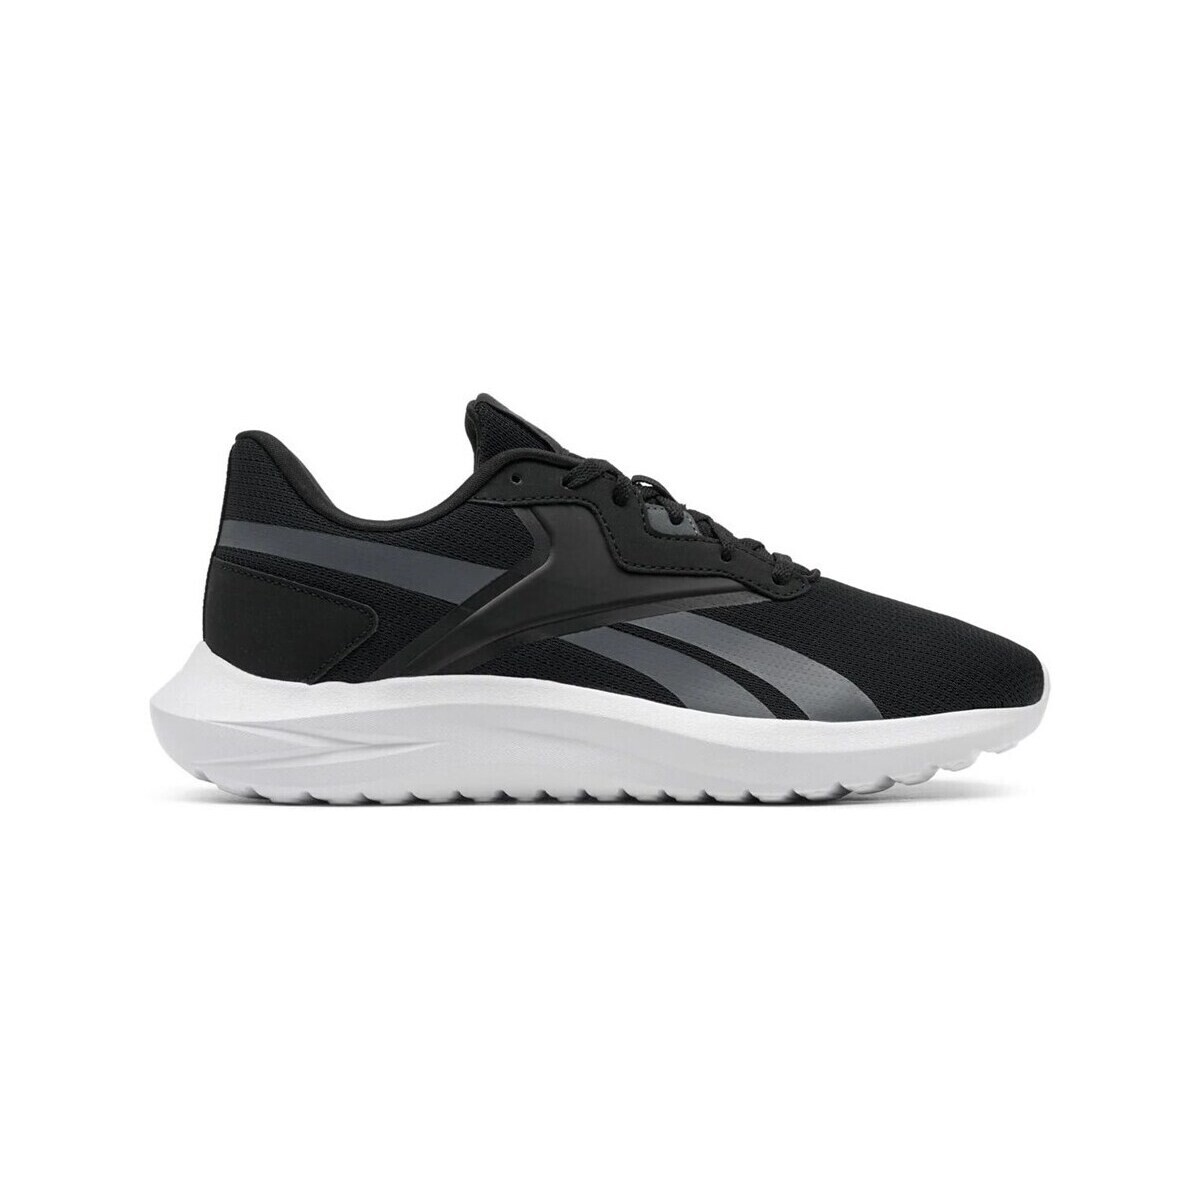 Shoes Men Running shoes Reebok Sport Energen Lux Black, Grey